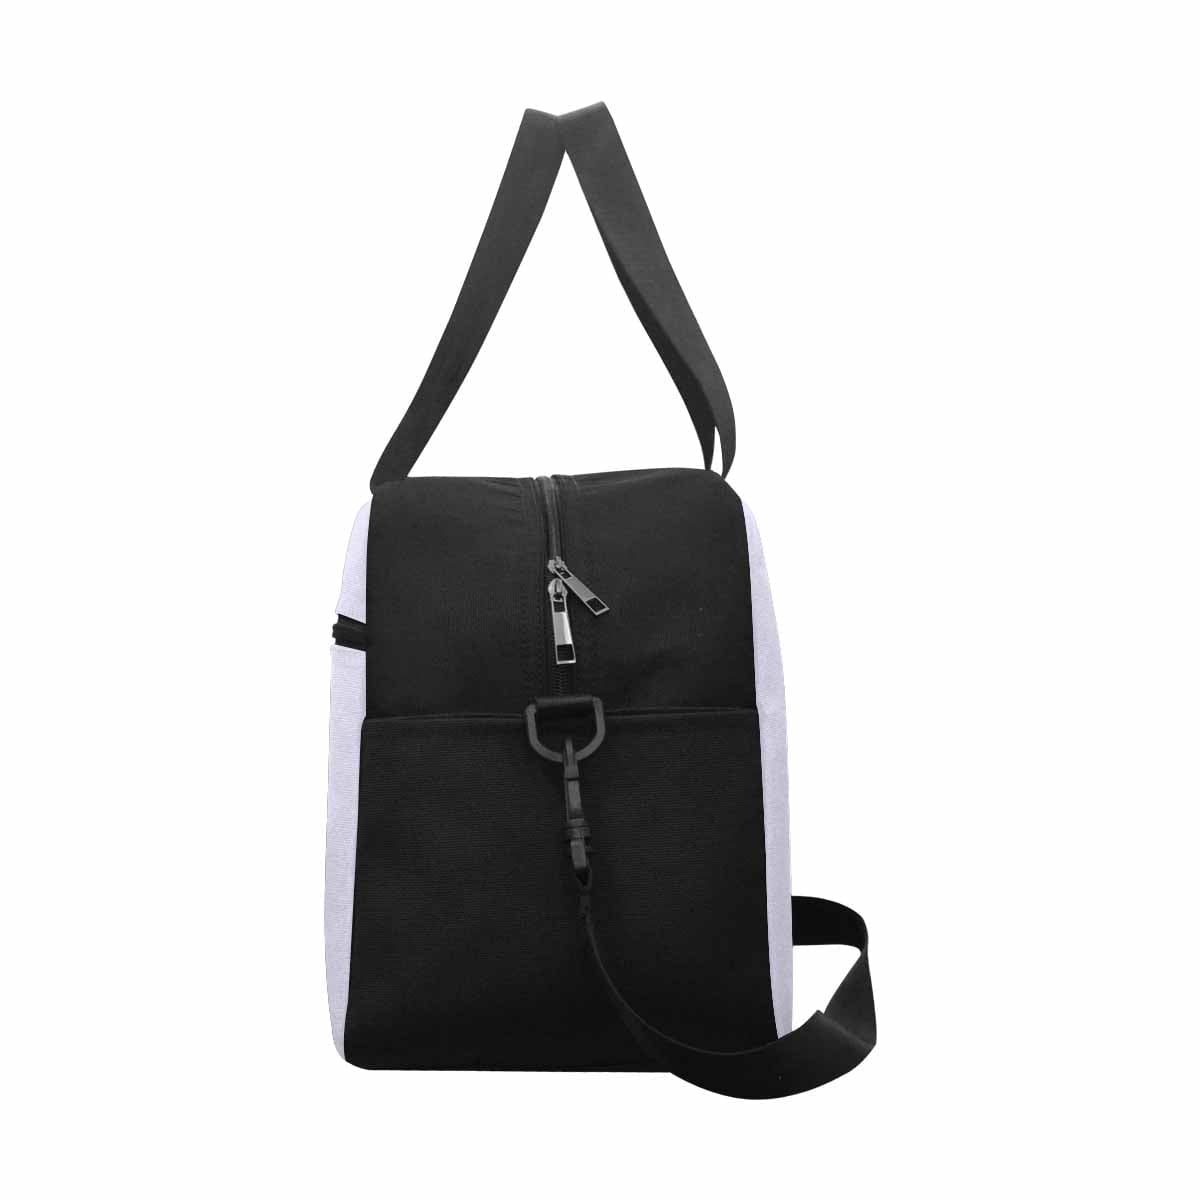 Lavender Purple Tote And Crossbody Travel Bag - Bags | Travel Bags | Crossbody